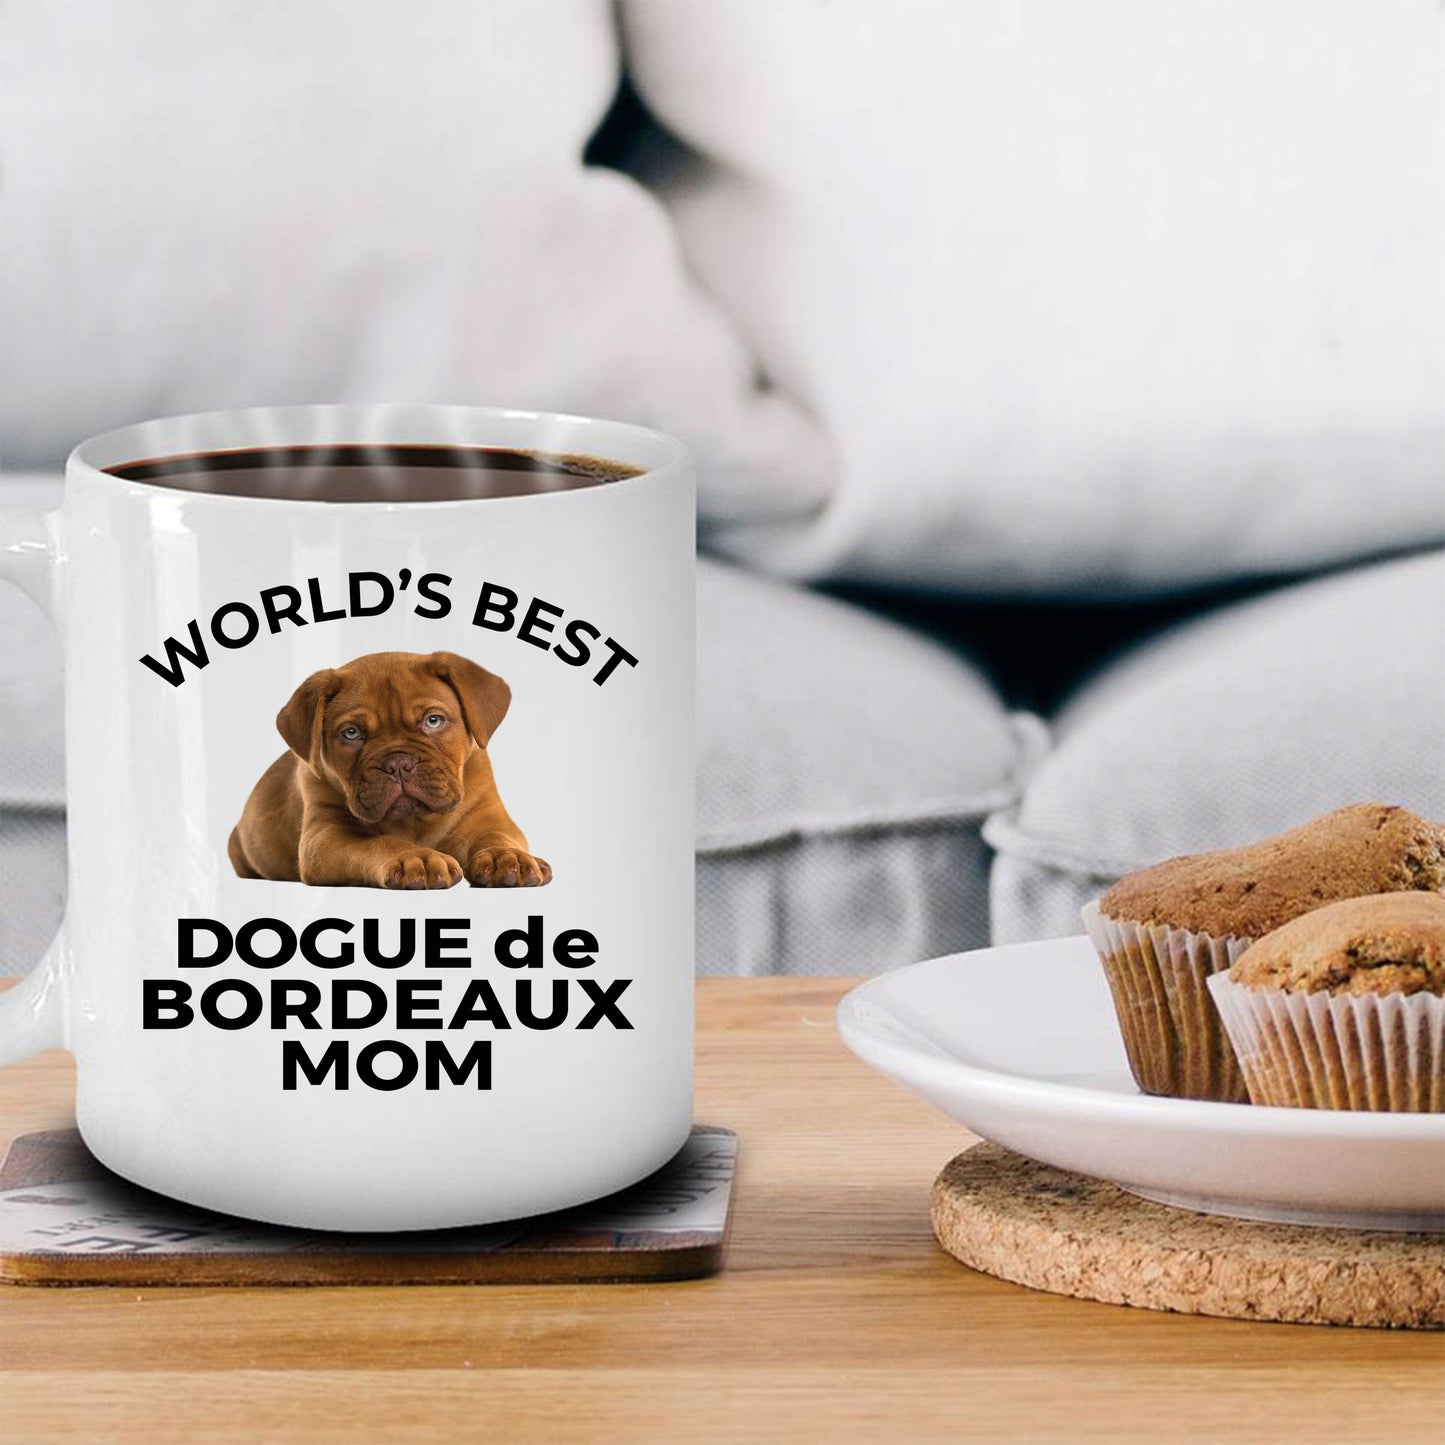 Dogue de Bordeaux Puppy Dog Mom Coffee Mug